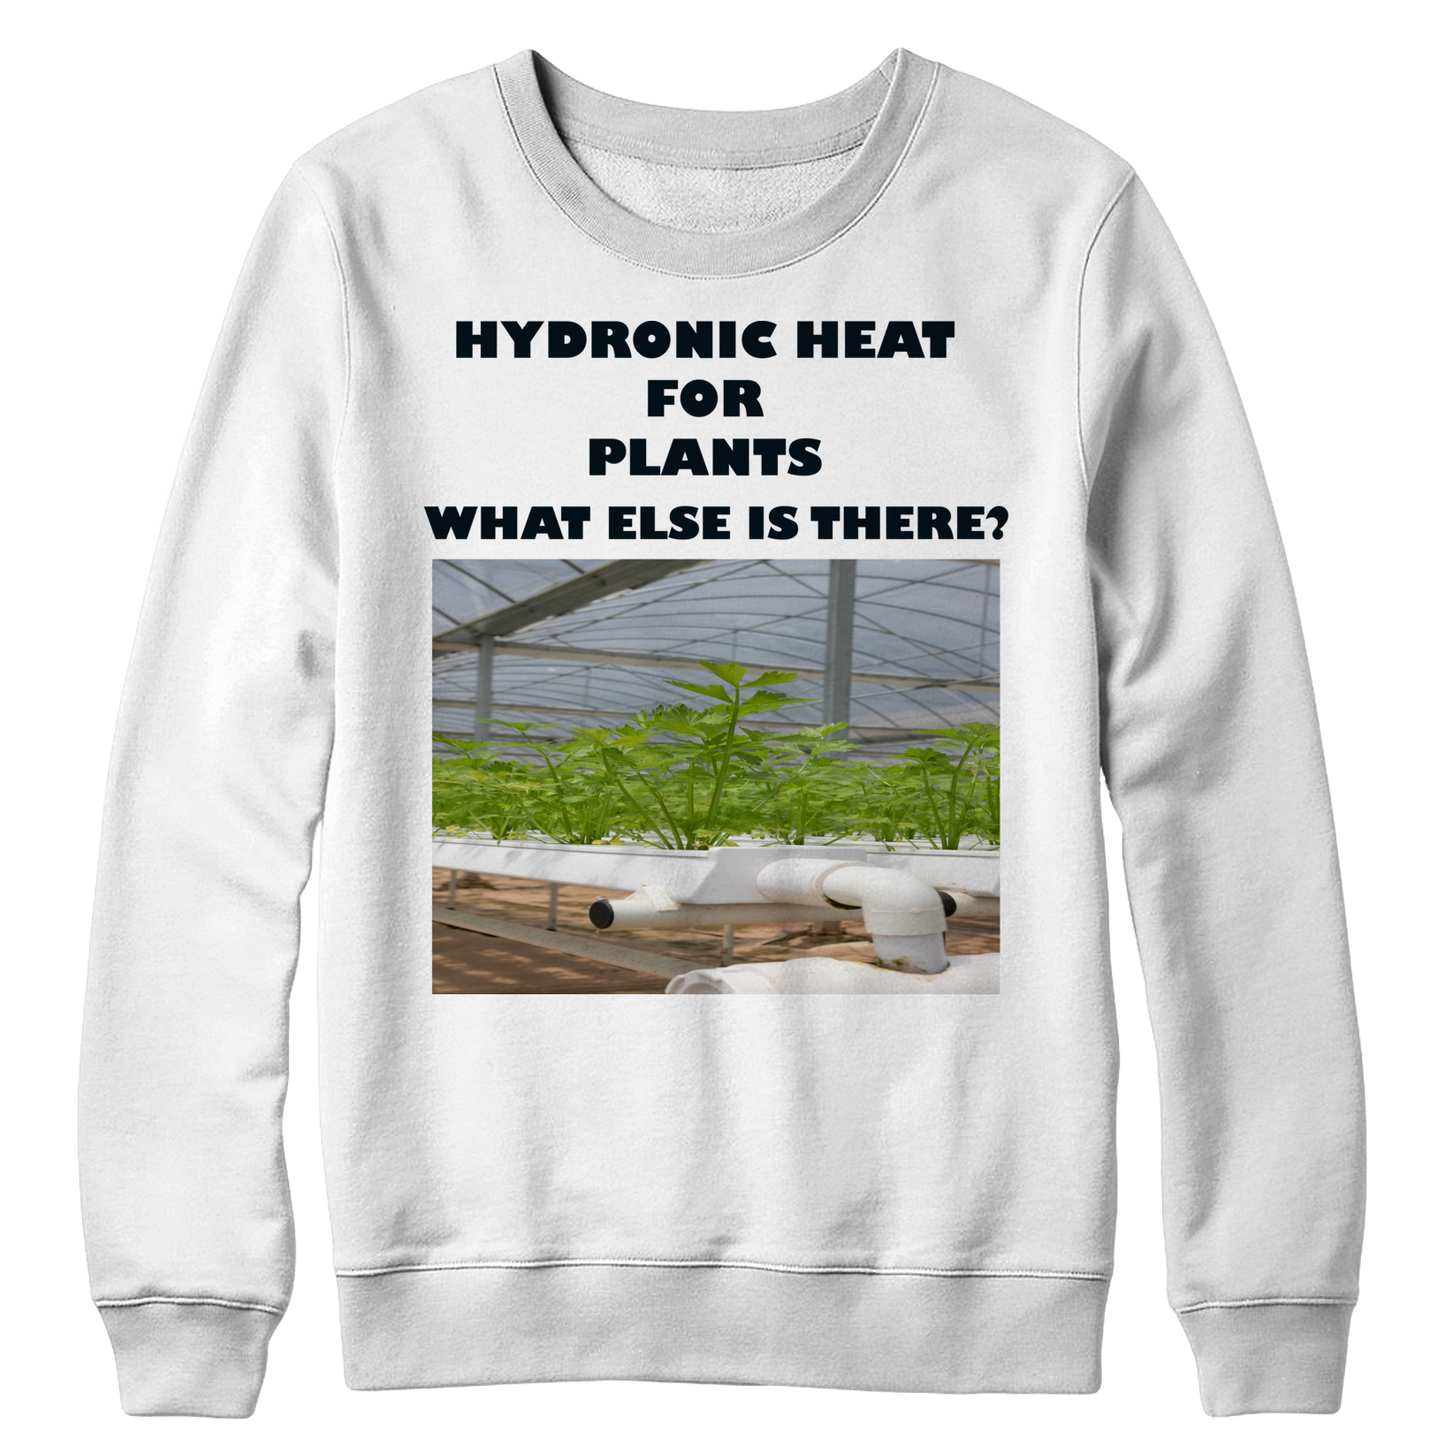 Hydronic Heat for Plants Crewneck Sweat Shirt